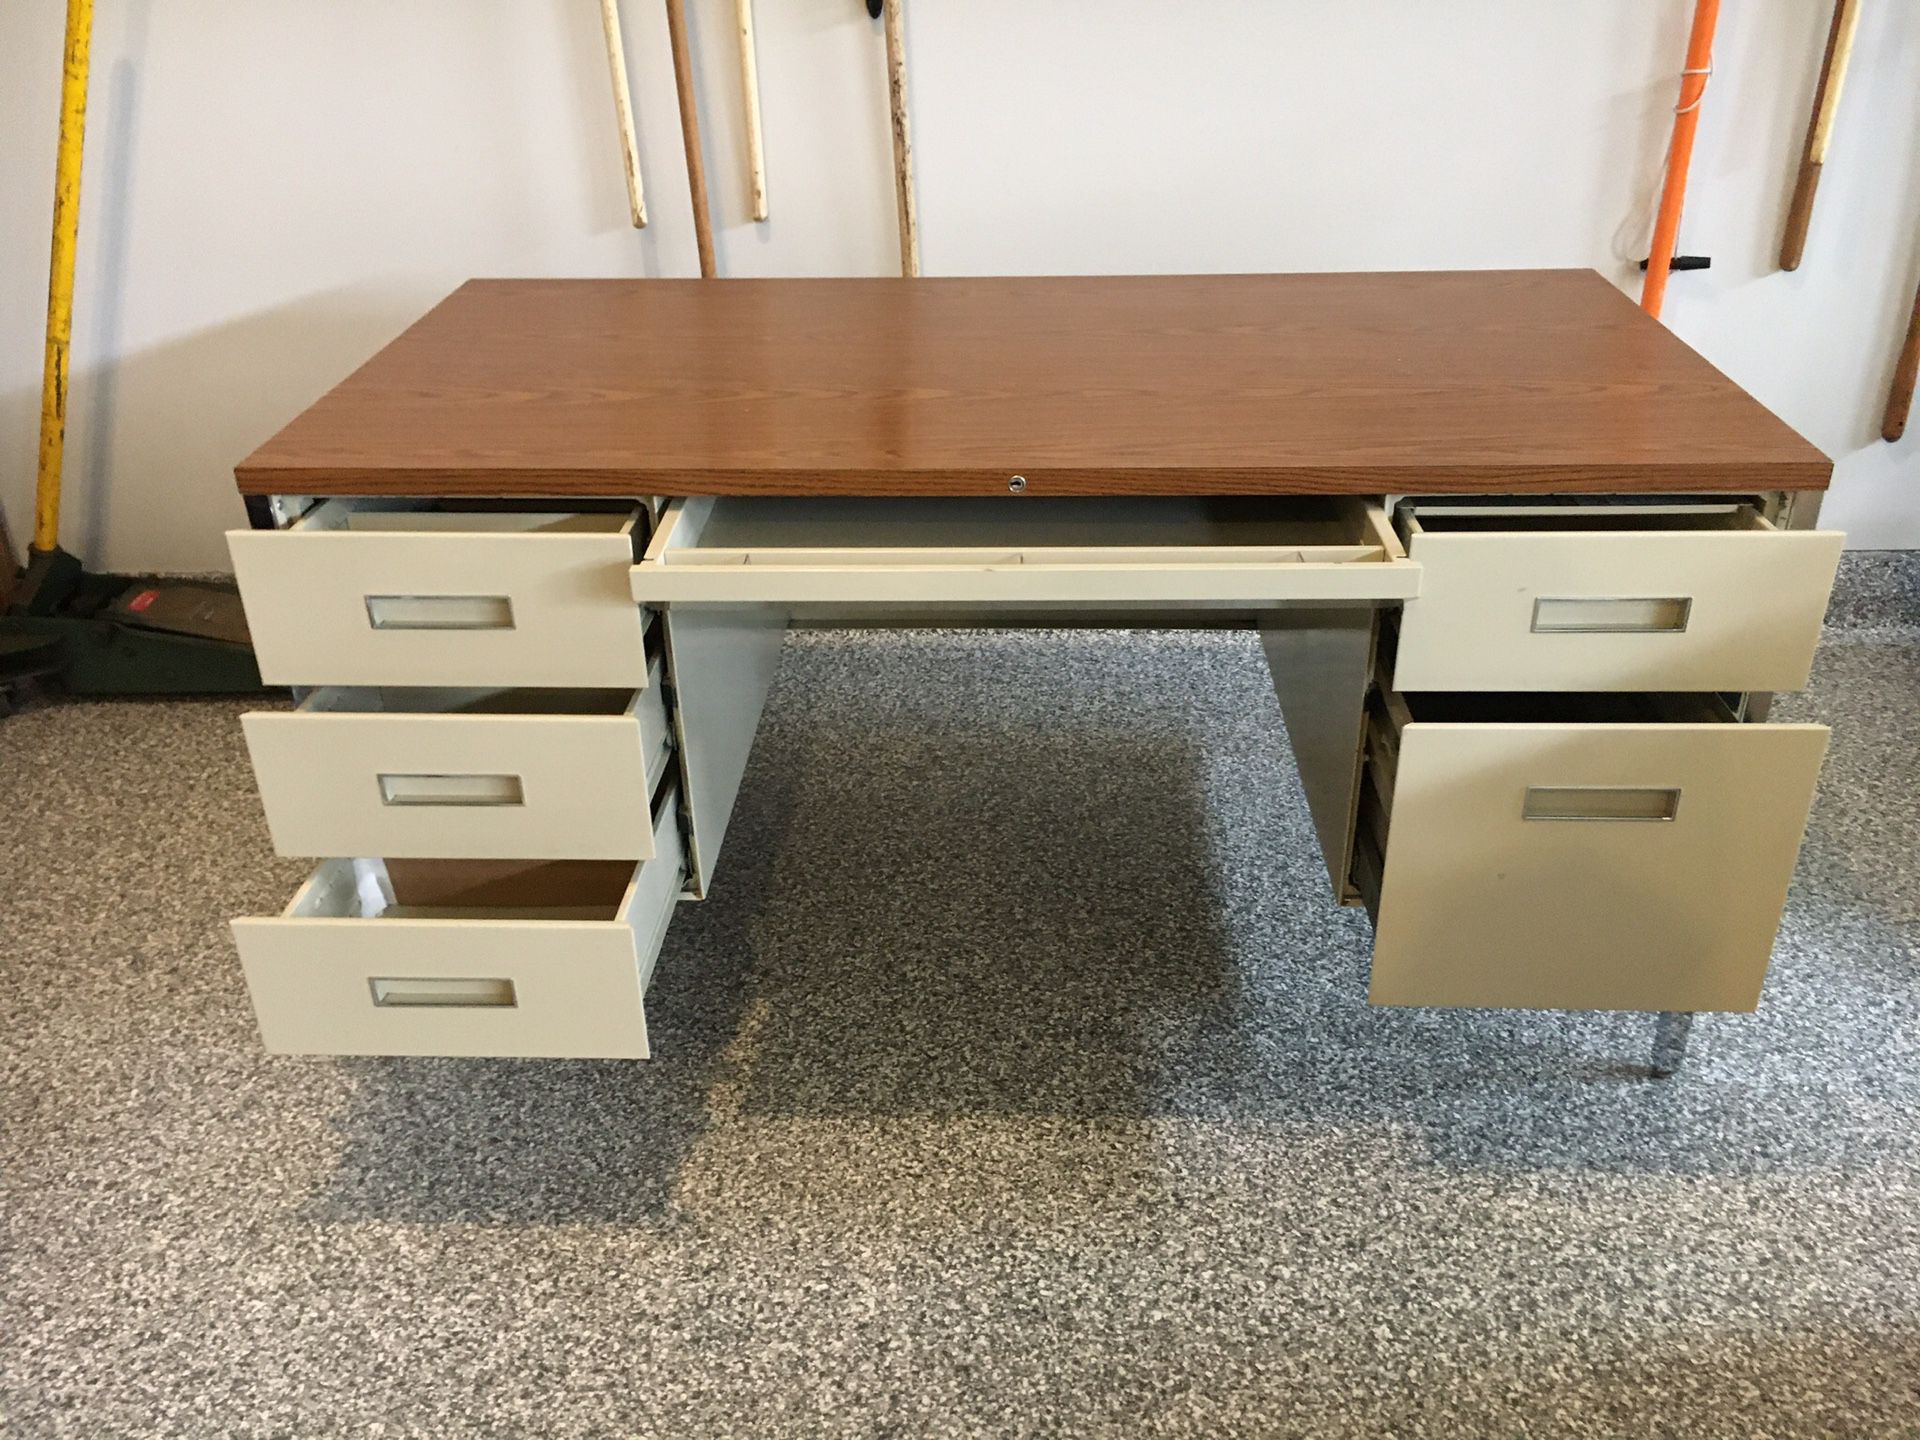 Steel case desk in very good condition. $75.00